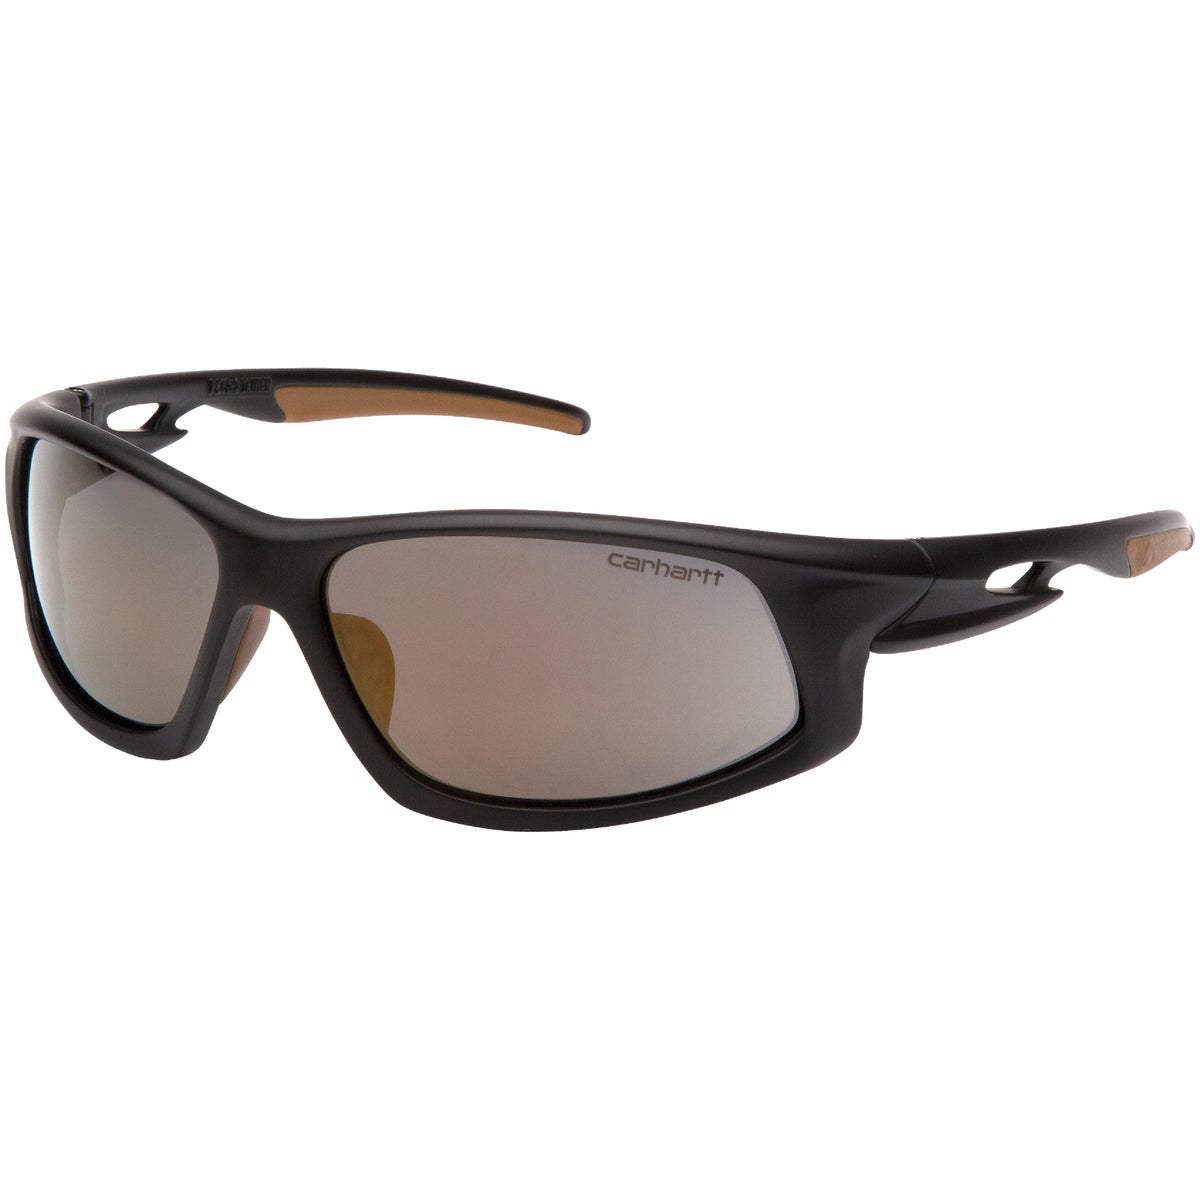 Carhartt Ironside Black & Tan Frame Safety Glasses with Antique Mirror Anti-Fog Lenses